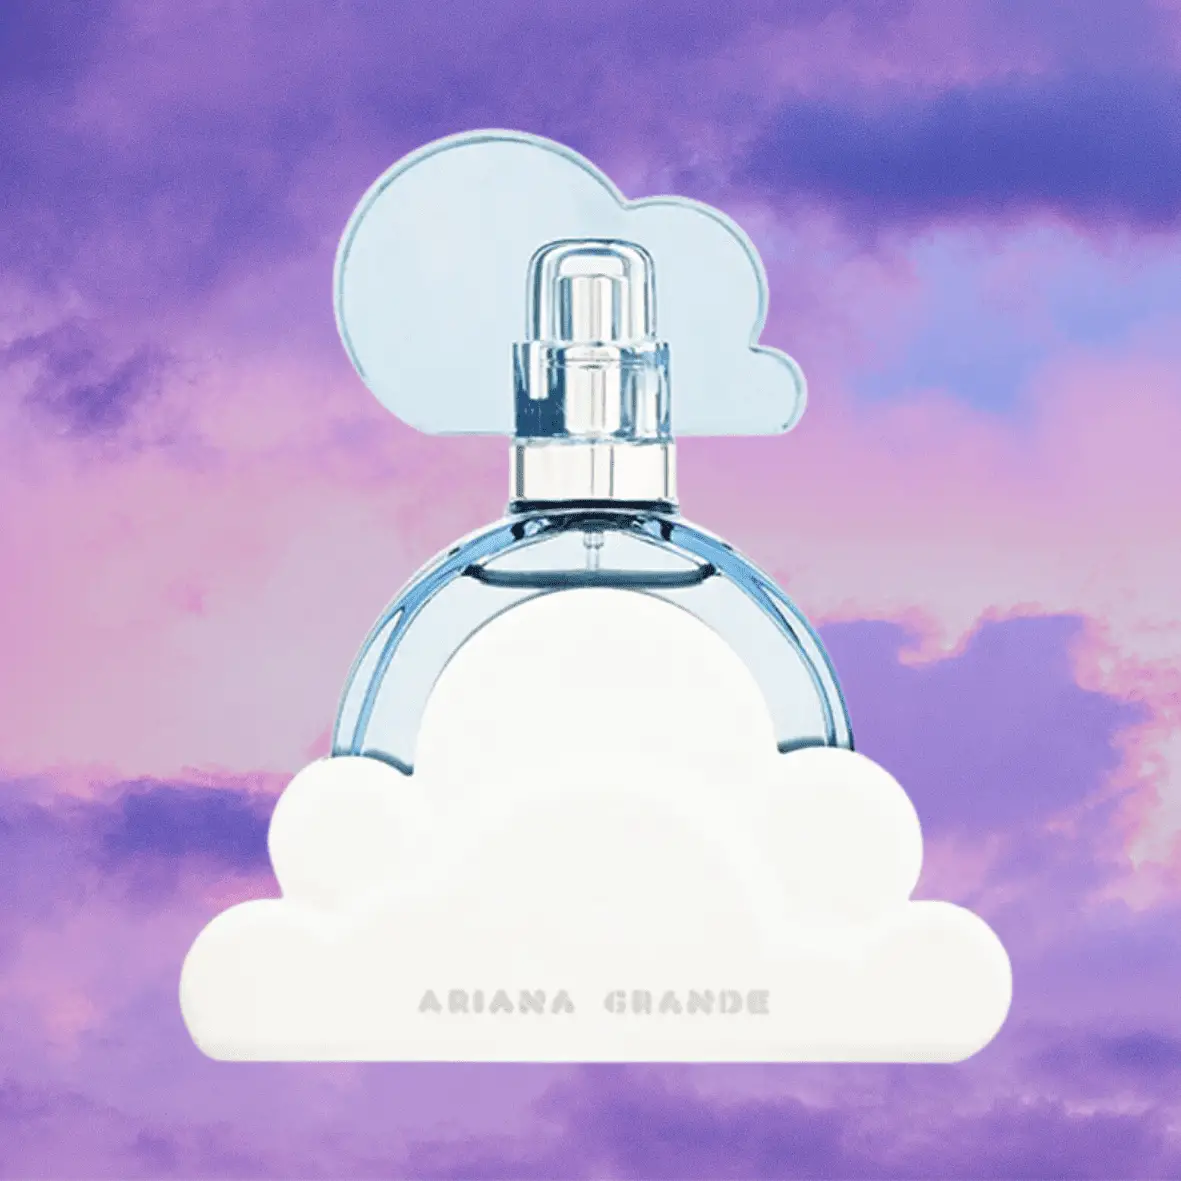 Ariana Grande Cloud
The Best Vegan and Cruelty Free Perfumes